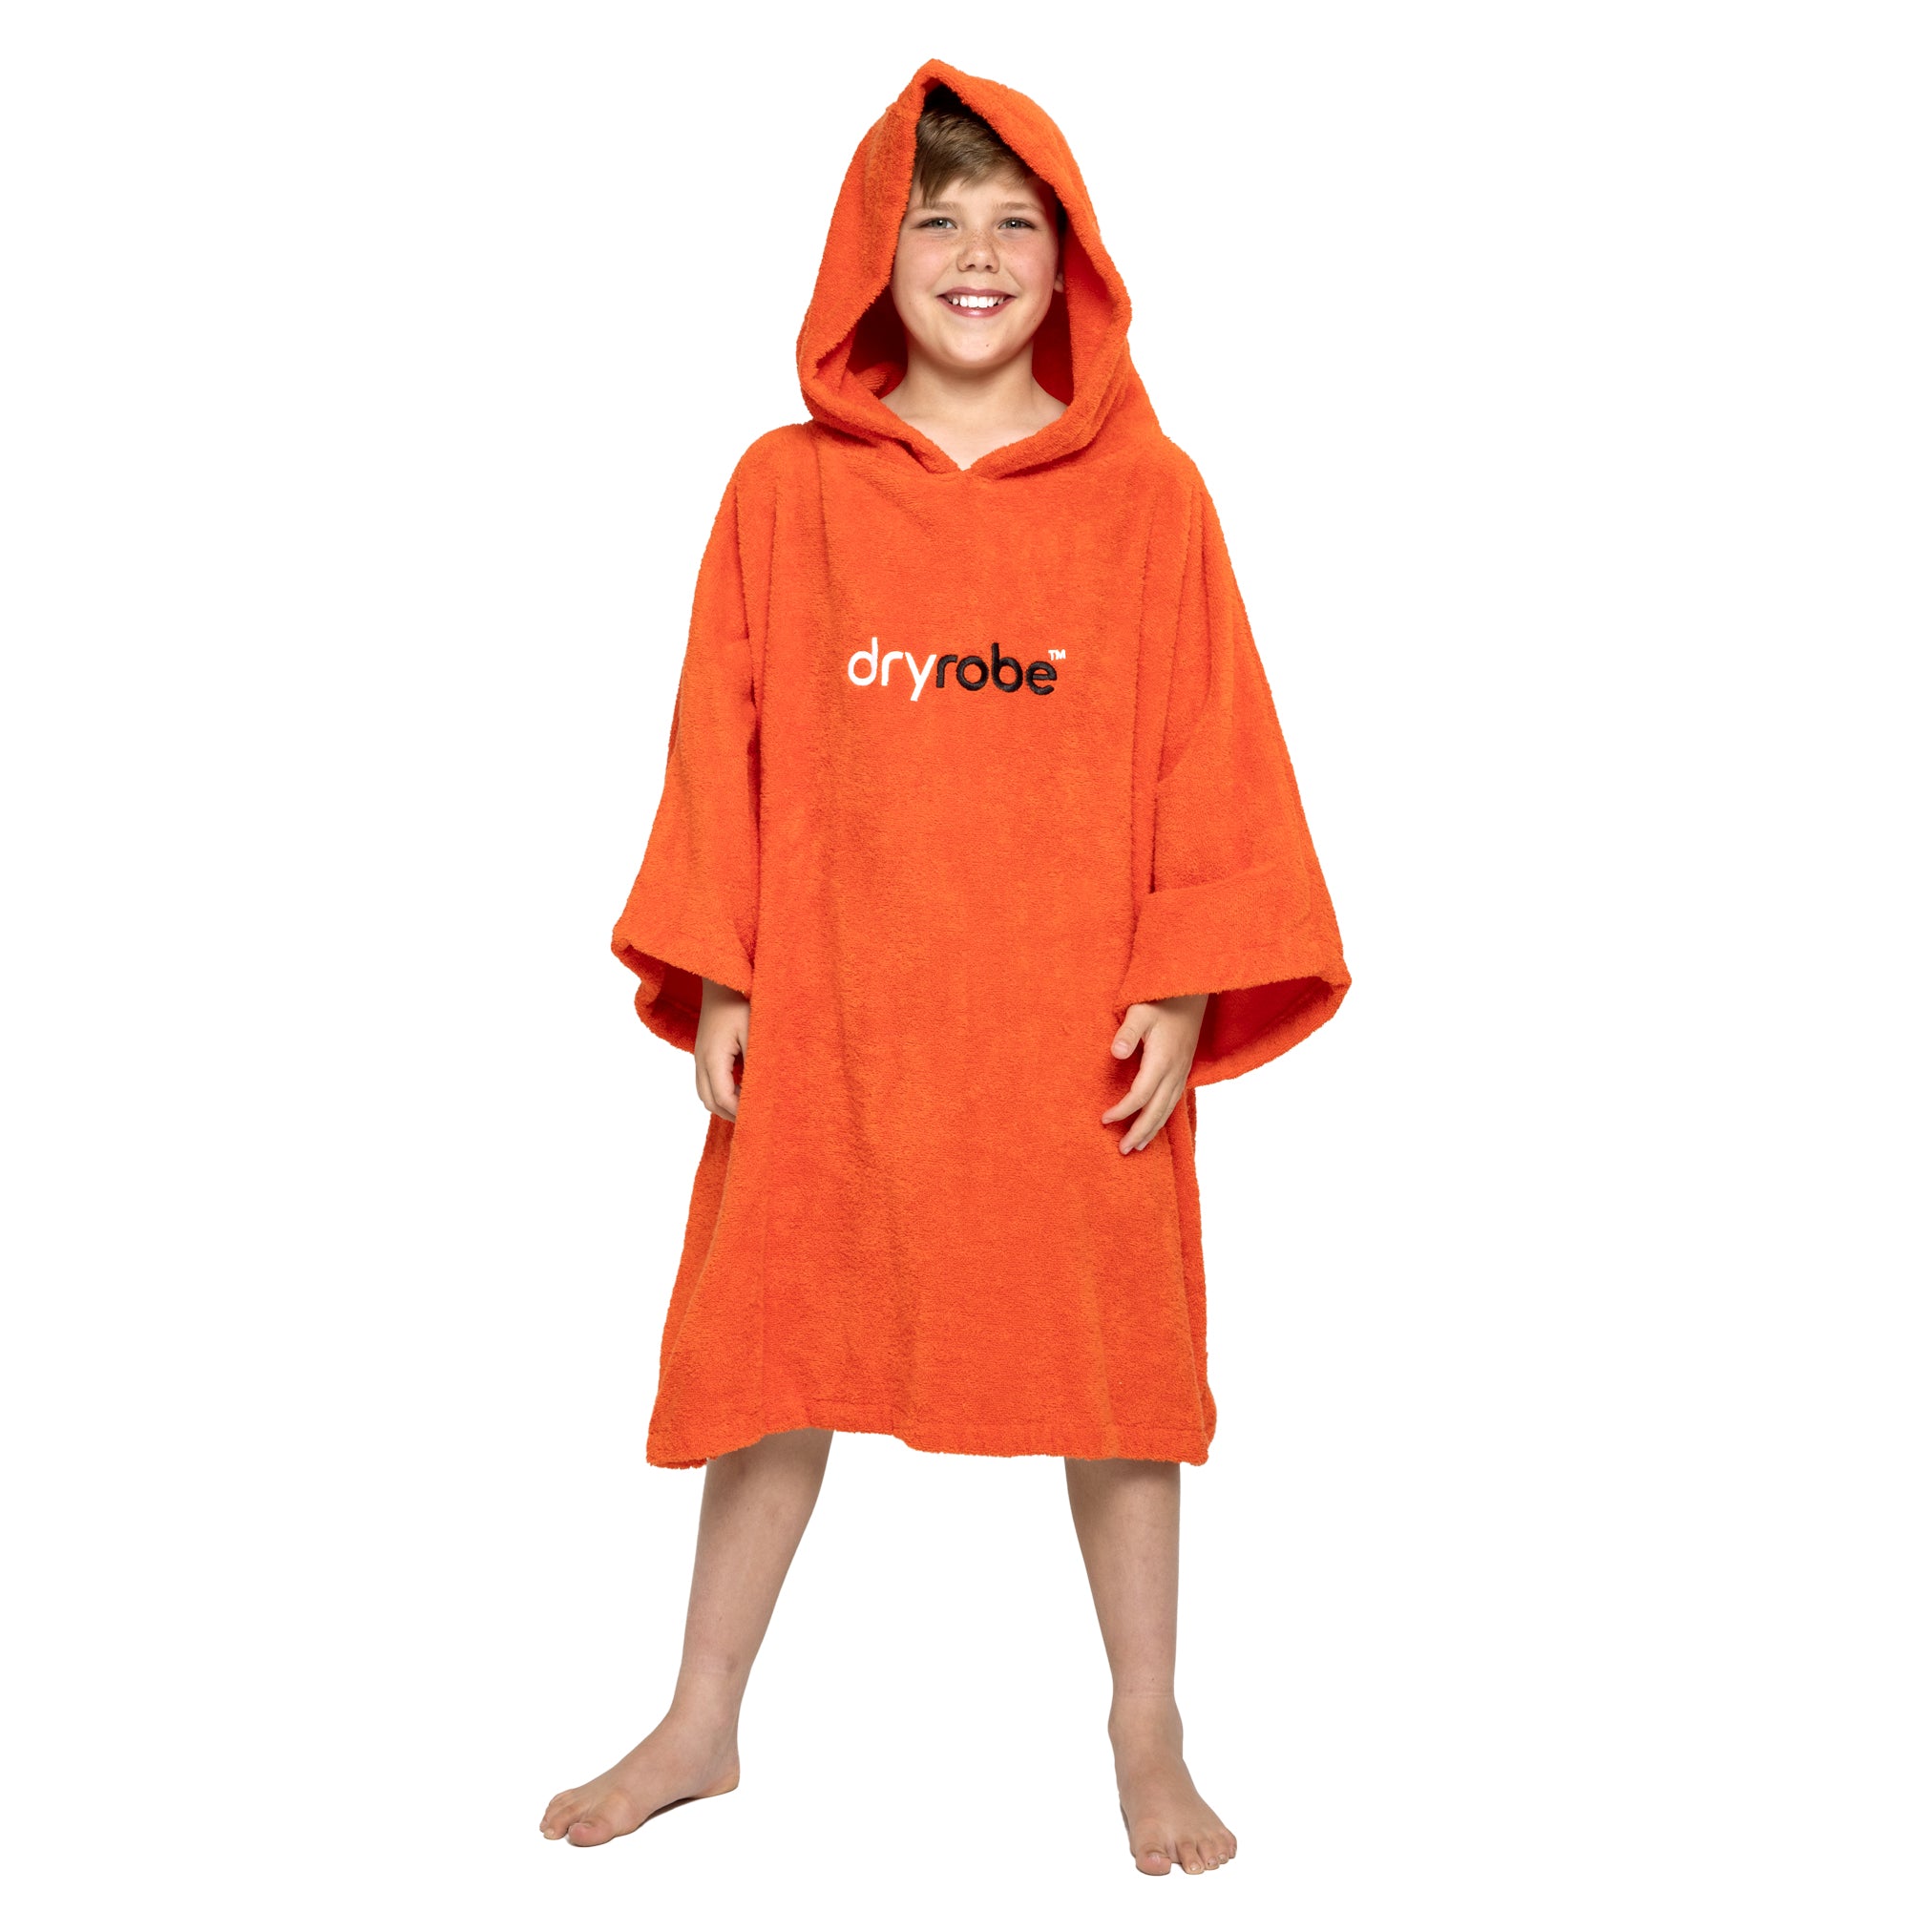 Boy wearing organic cotton towel dryrobe® in orange